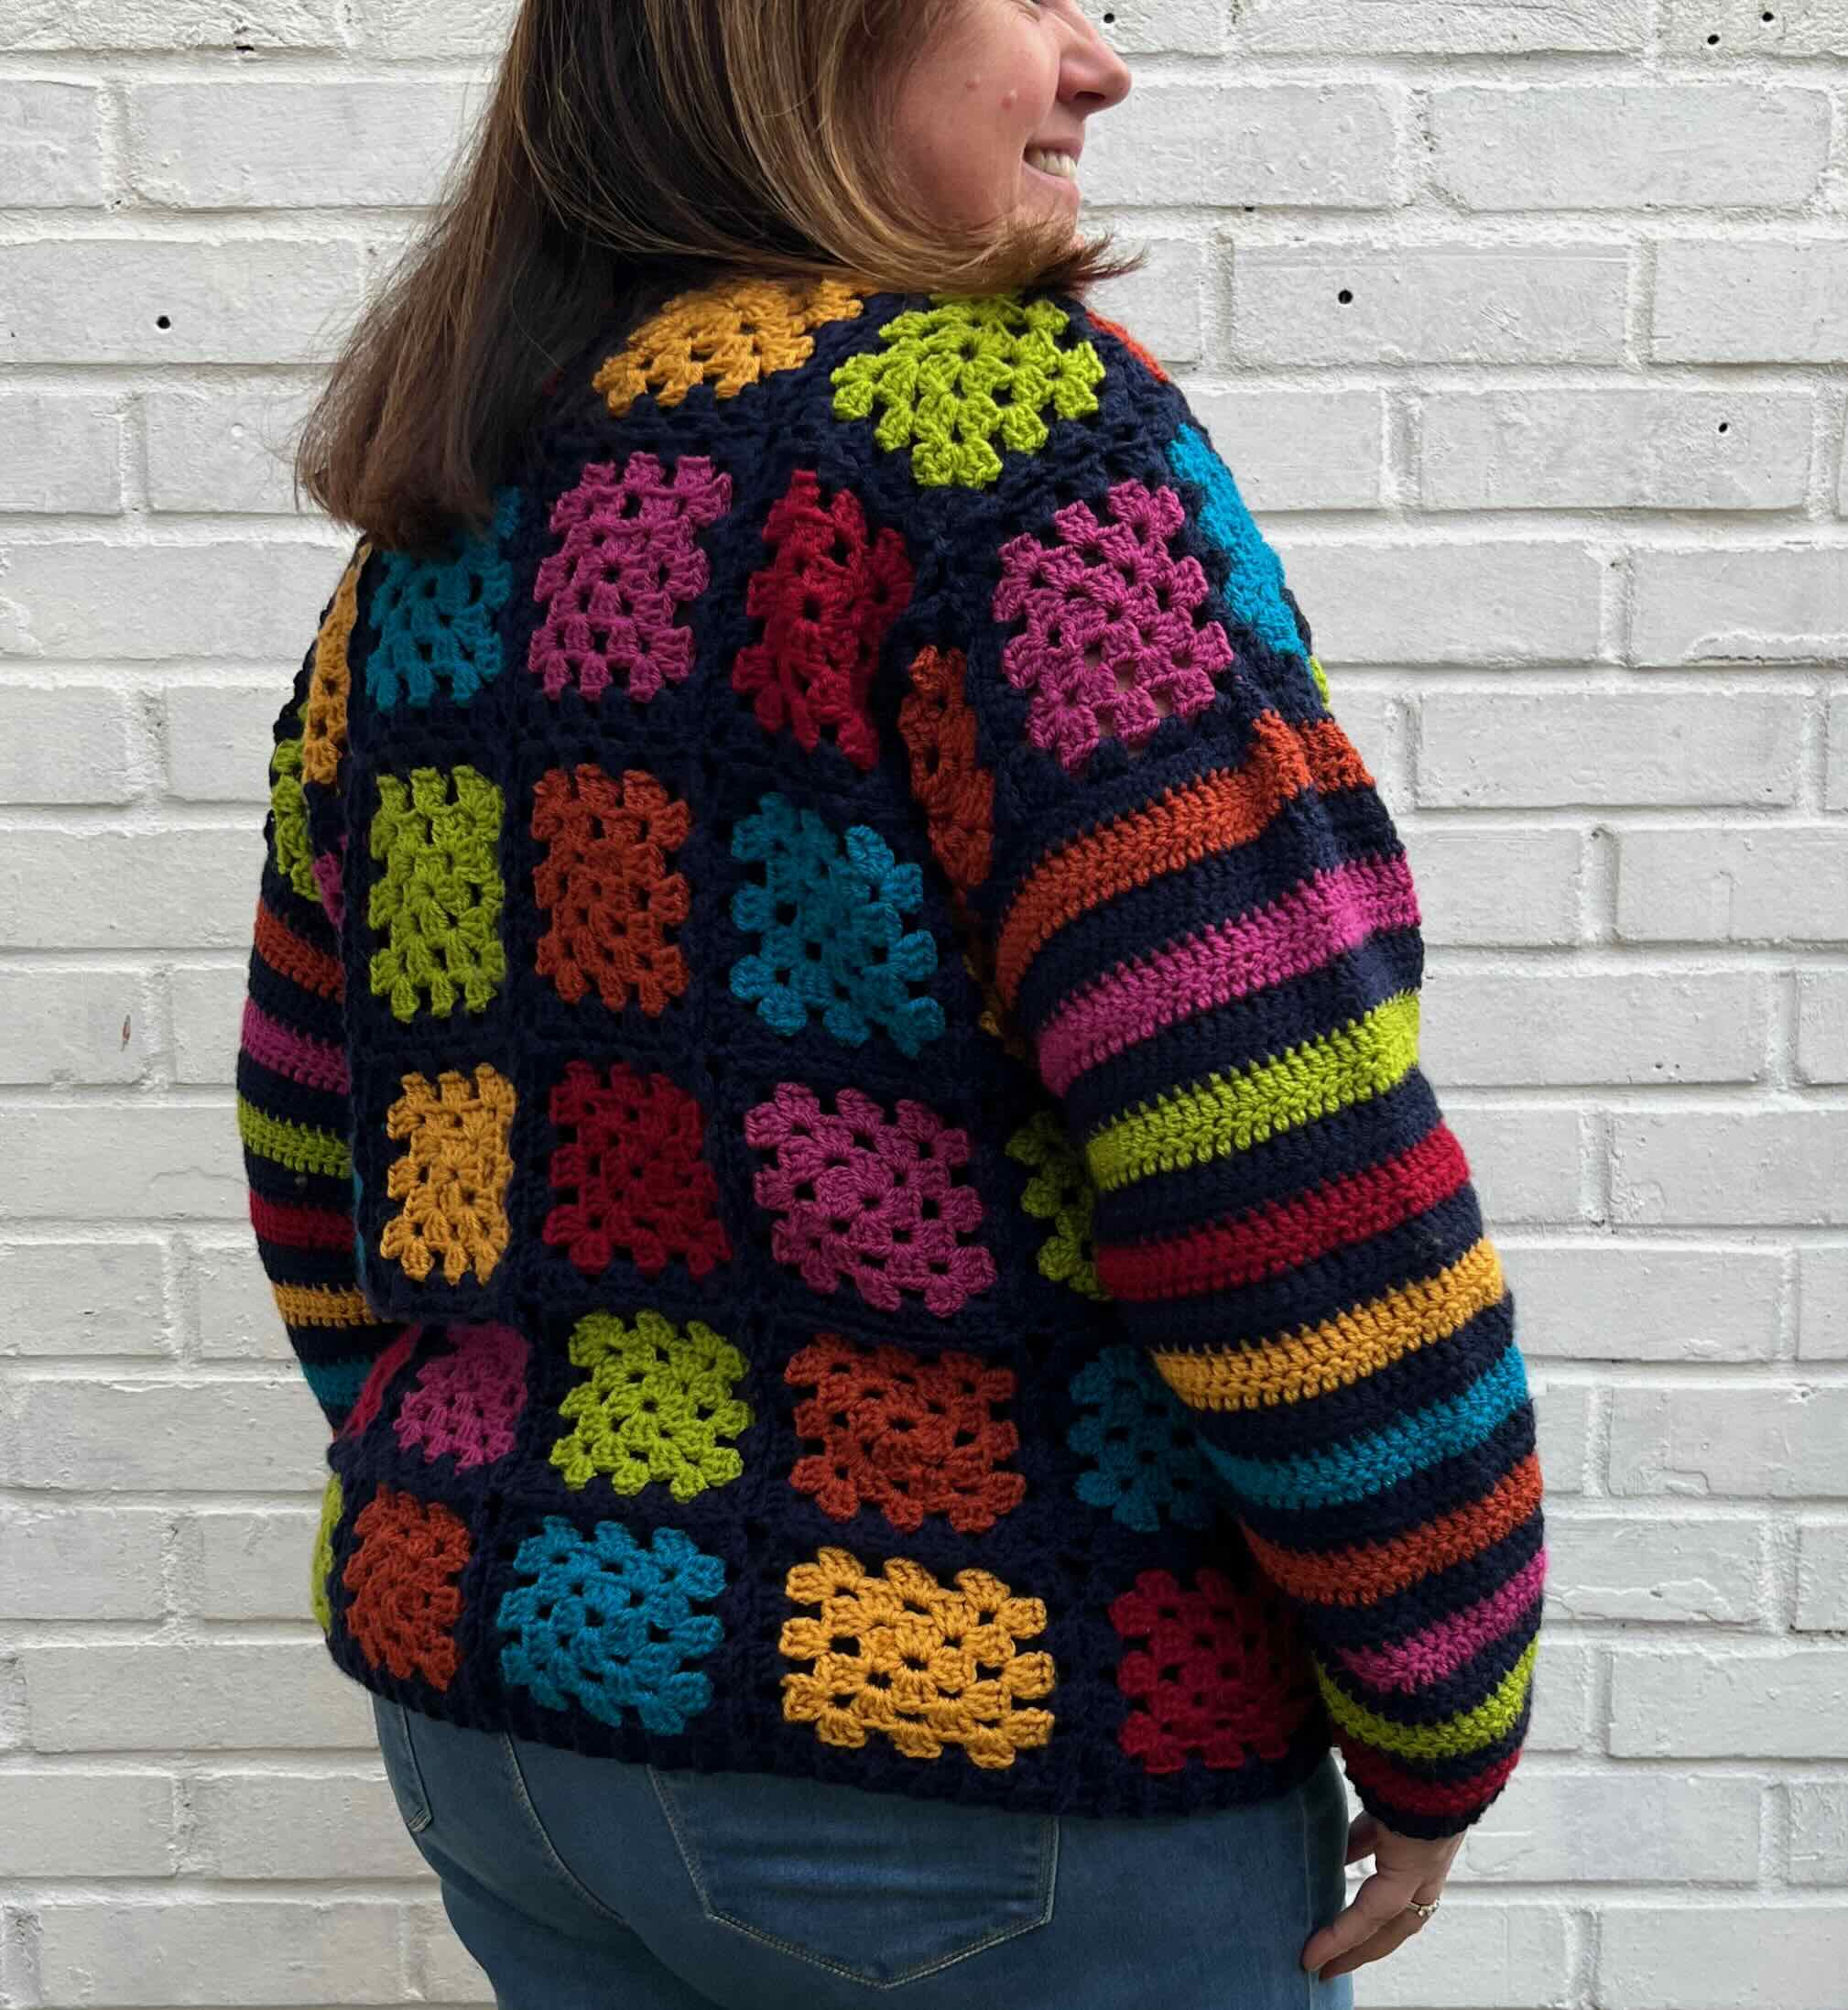 Rainbow granny square sweater free pattern